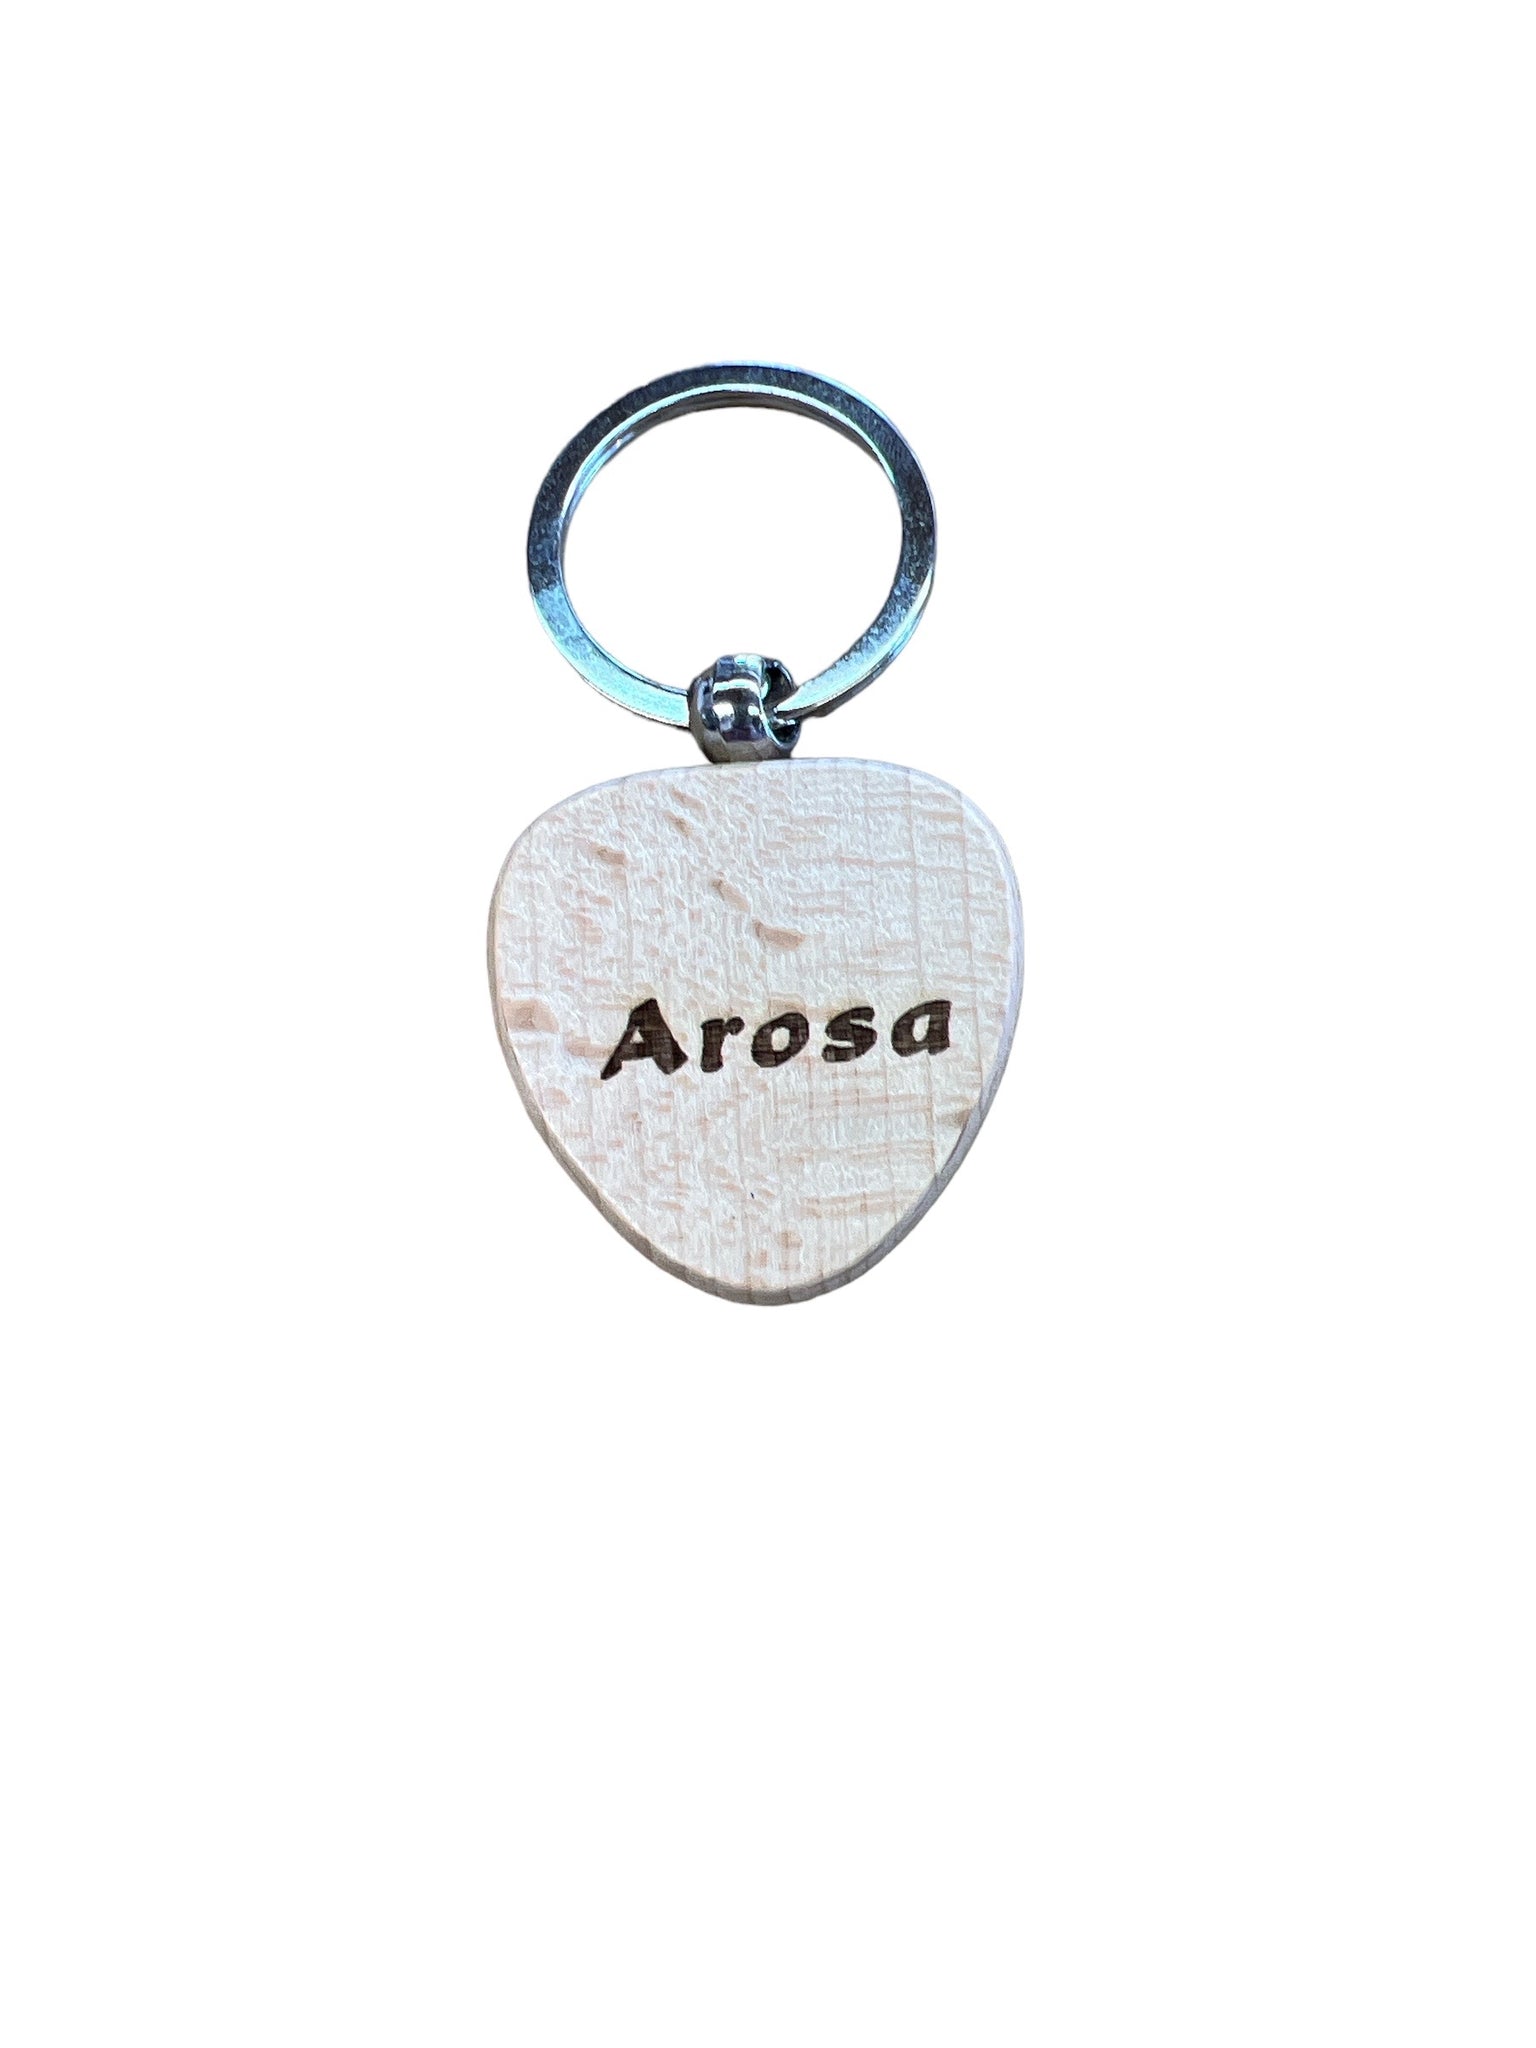 Arosa key ring